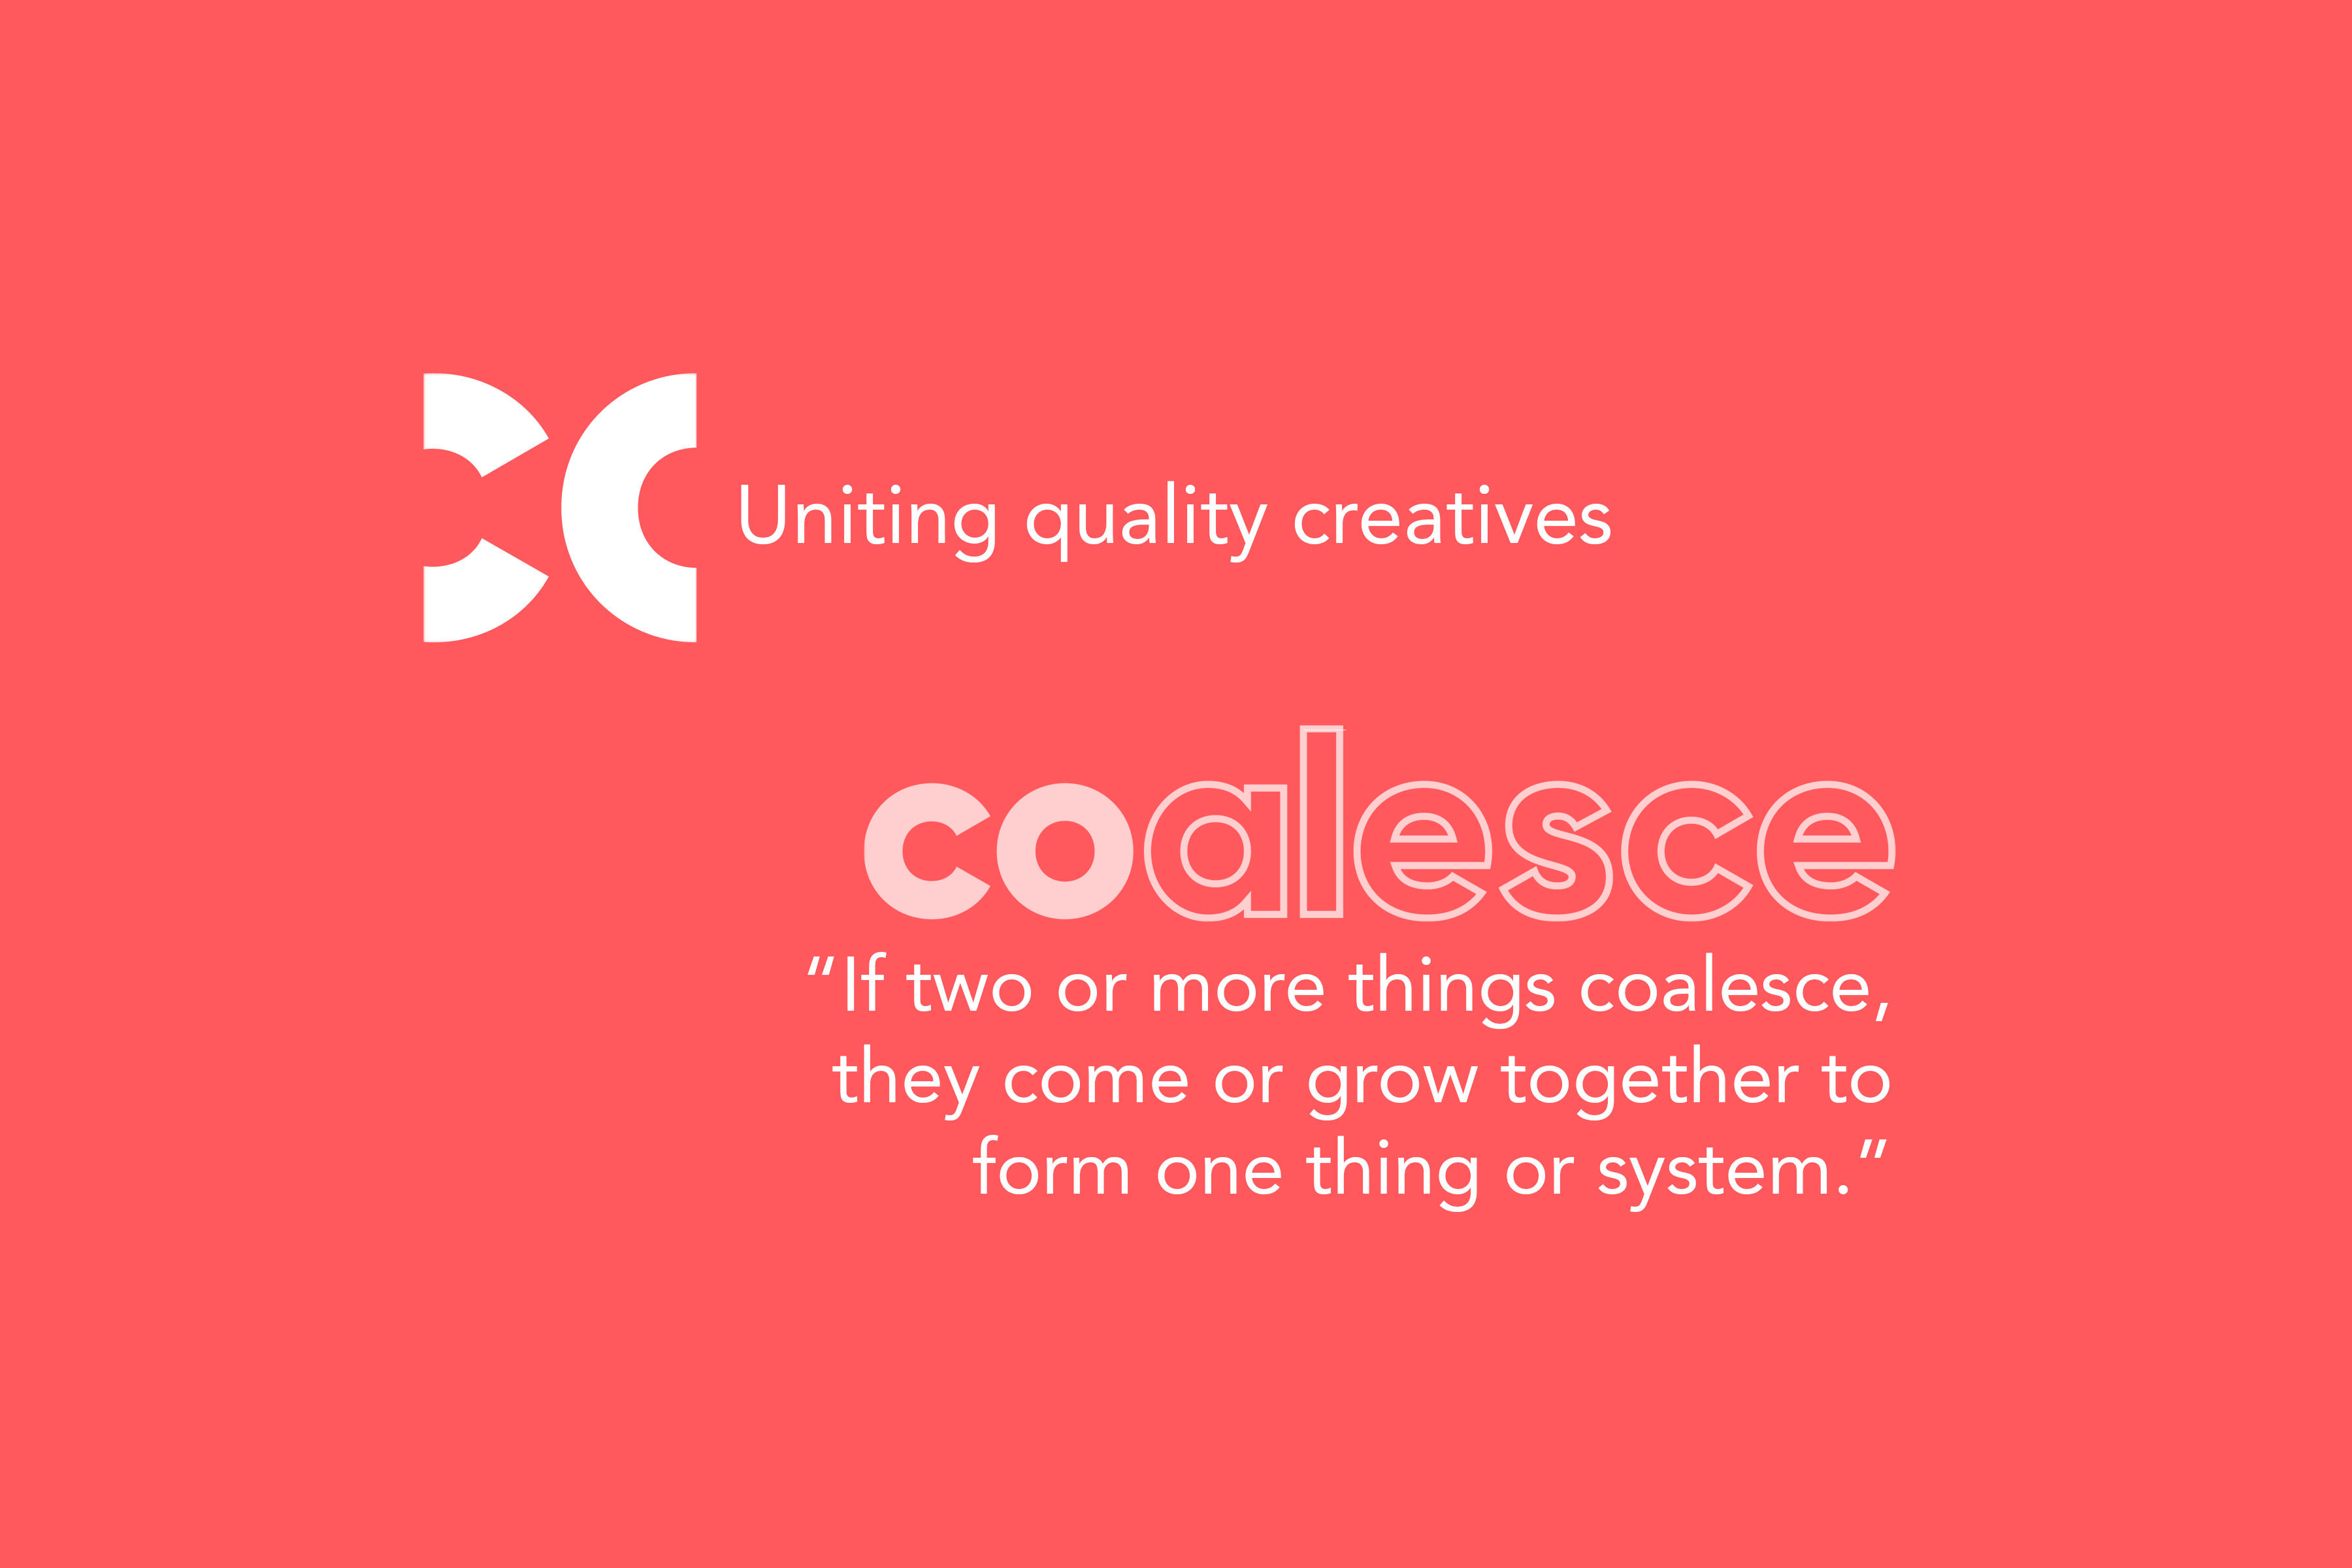 The new Coalesce; where quality creatives unite